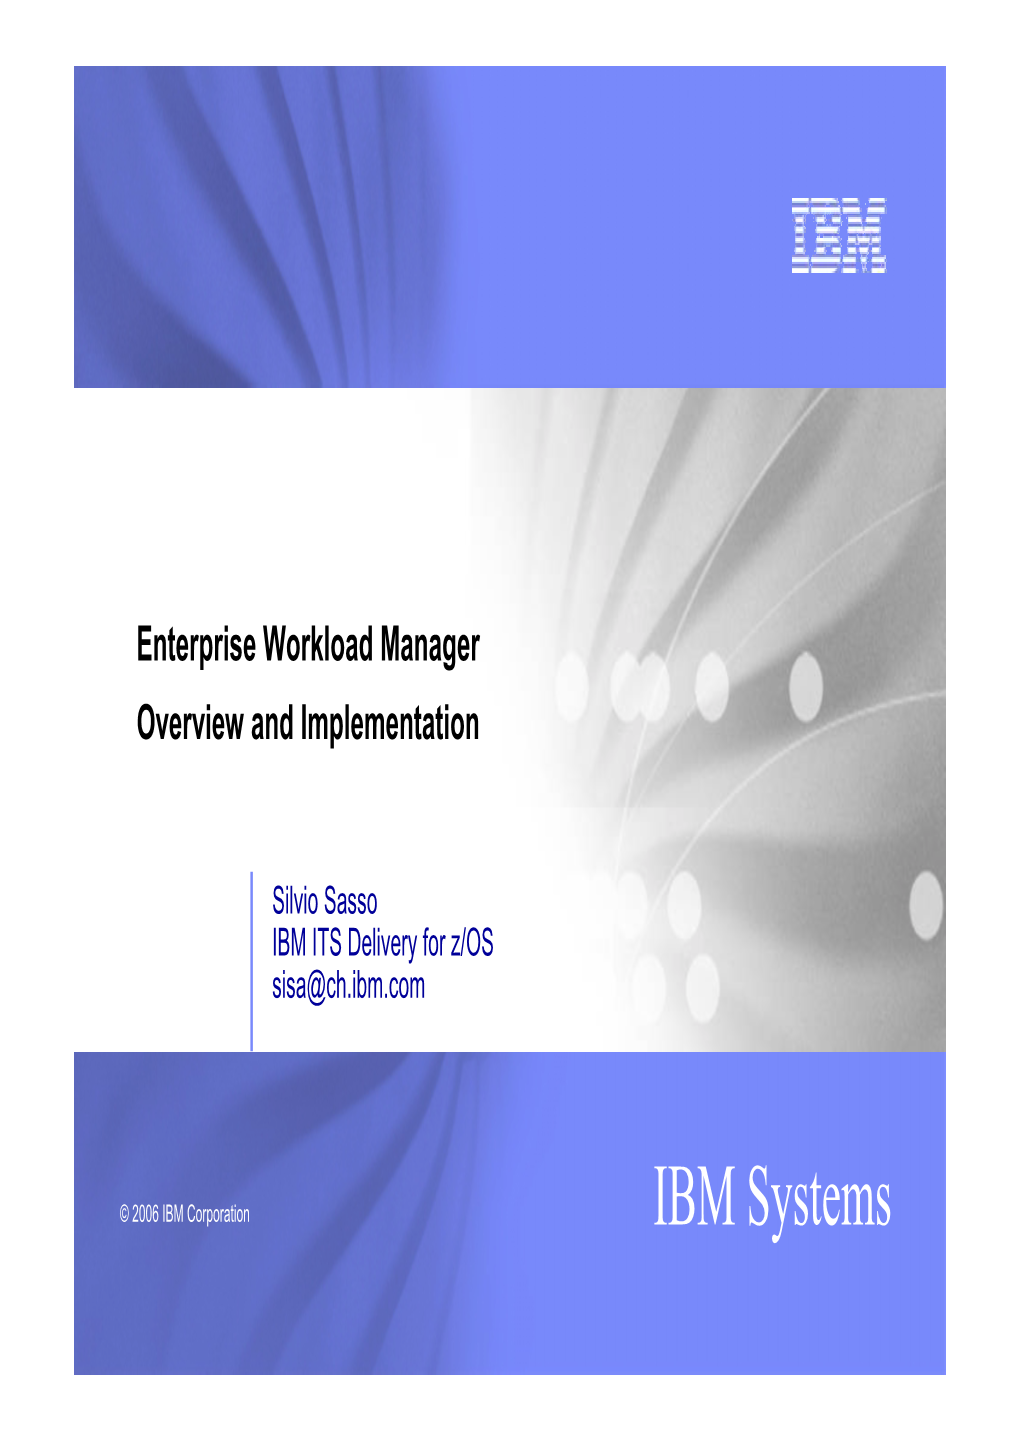 IBM Systems Trademarks